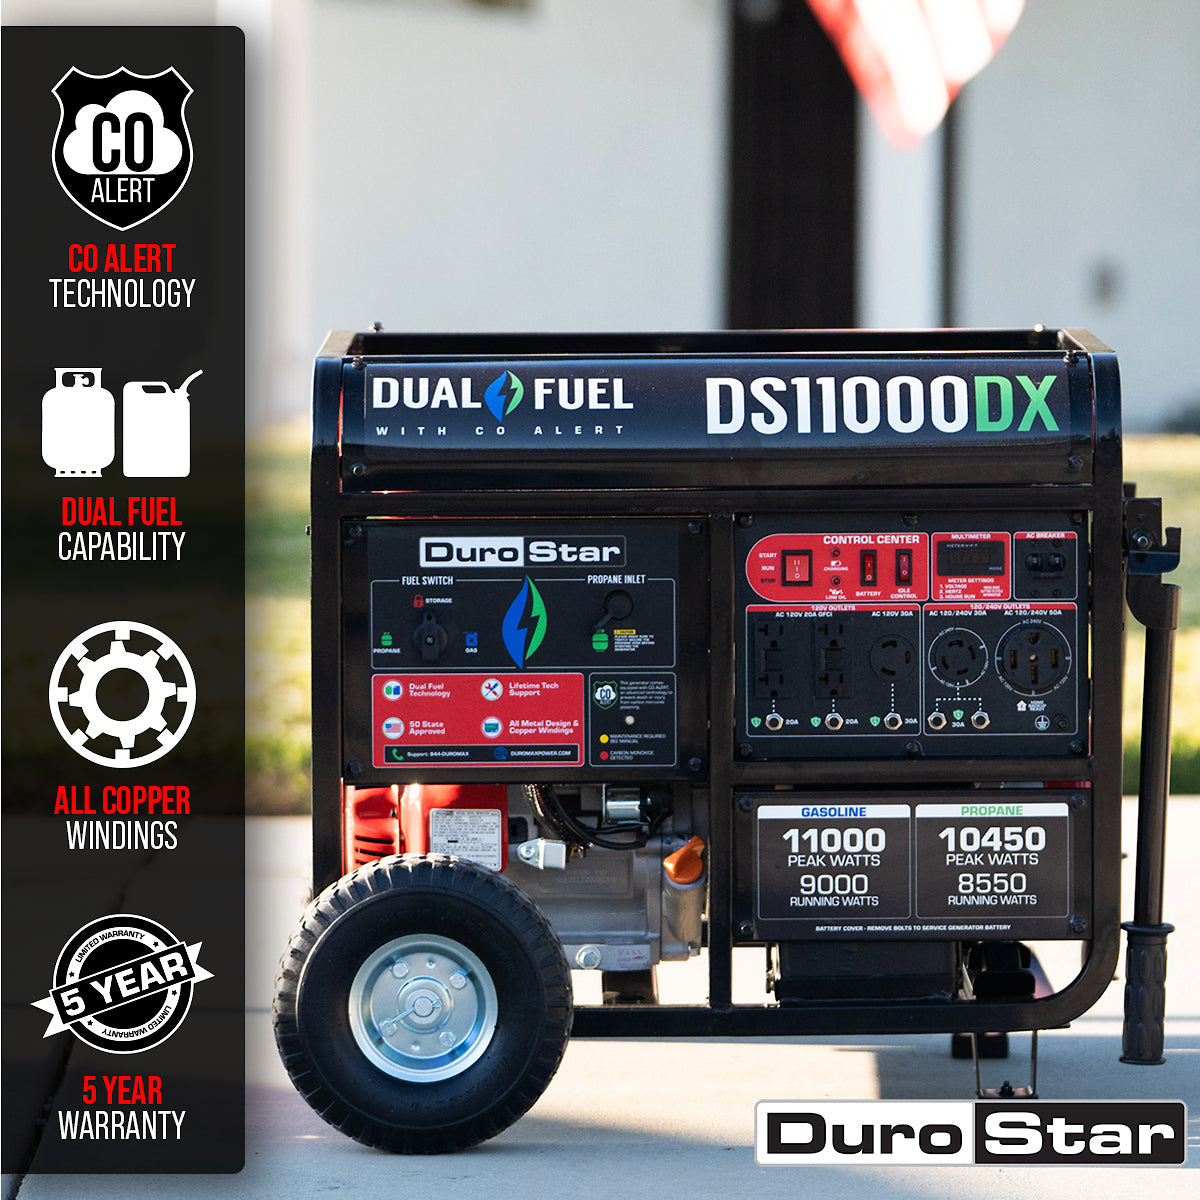 DuroStar DS11000DX 11,000W/9,000W 457cc Electric Start Dual Fuel Portable Generator w/ CO Alert